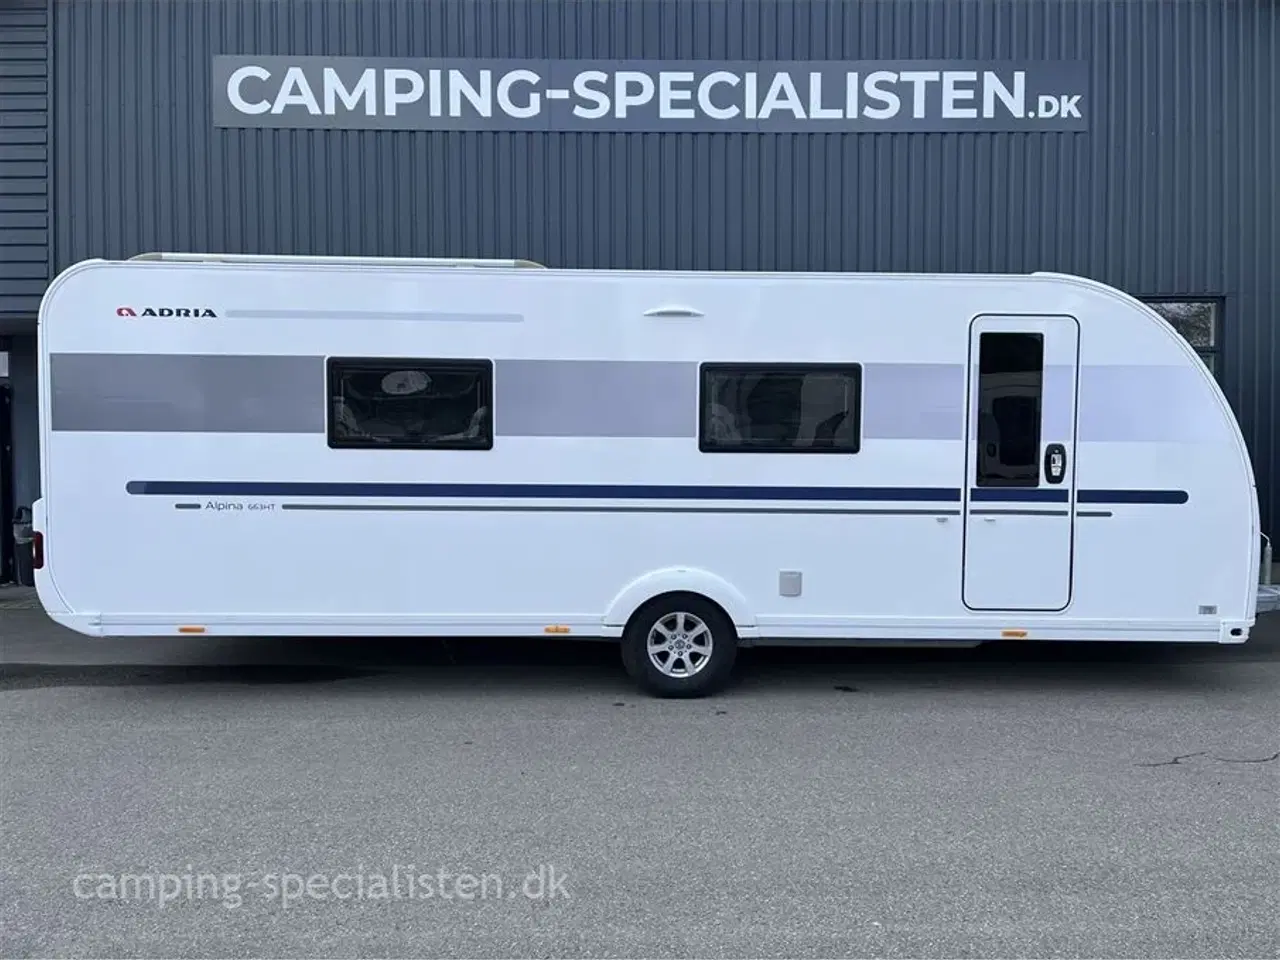 Billede 1 - 2019 - Adria Alpina 663 HT   Adria Alpina 663 HT model 2019 kan nu ses hos Camping-Specialisten.dk i Aarhus